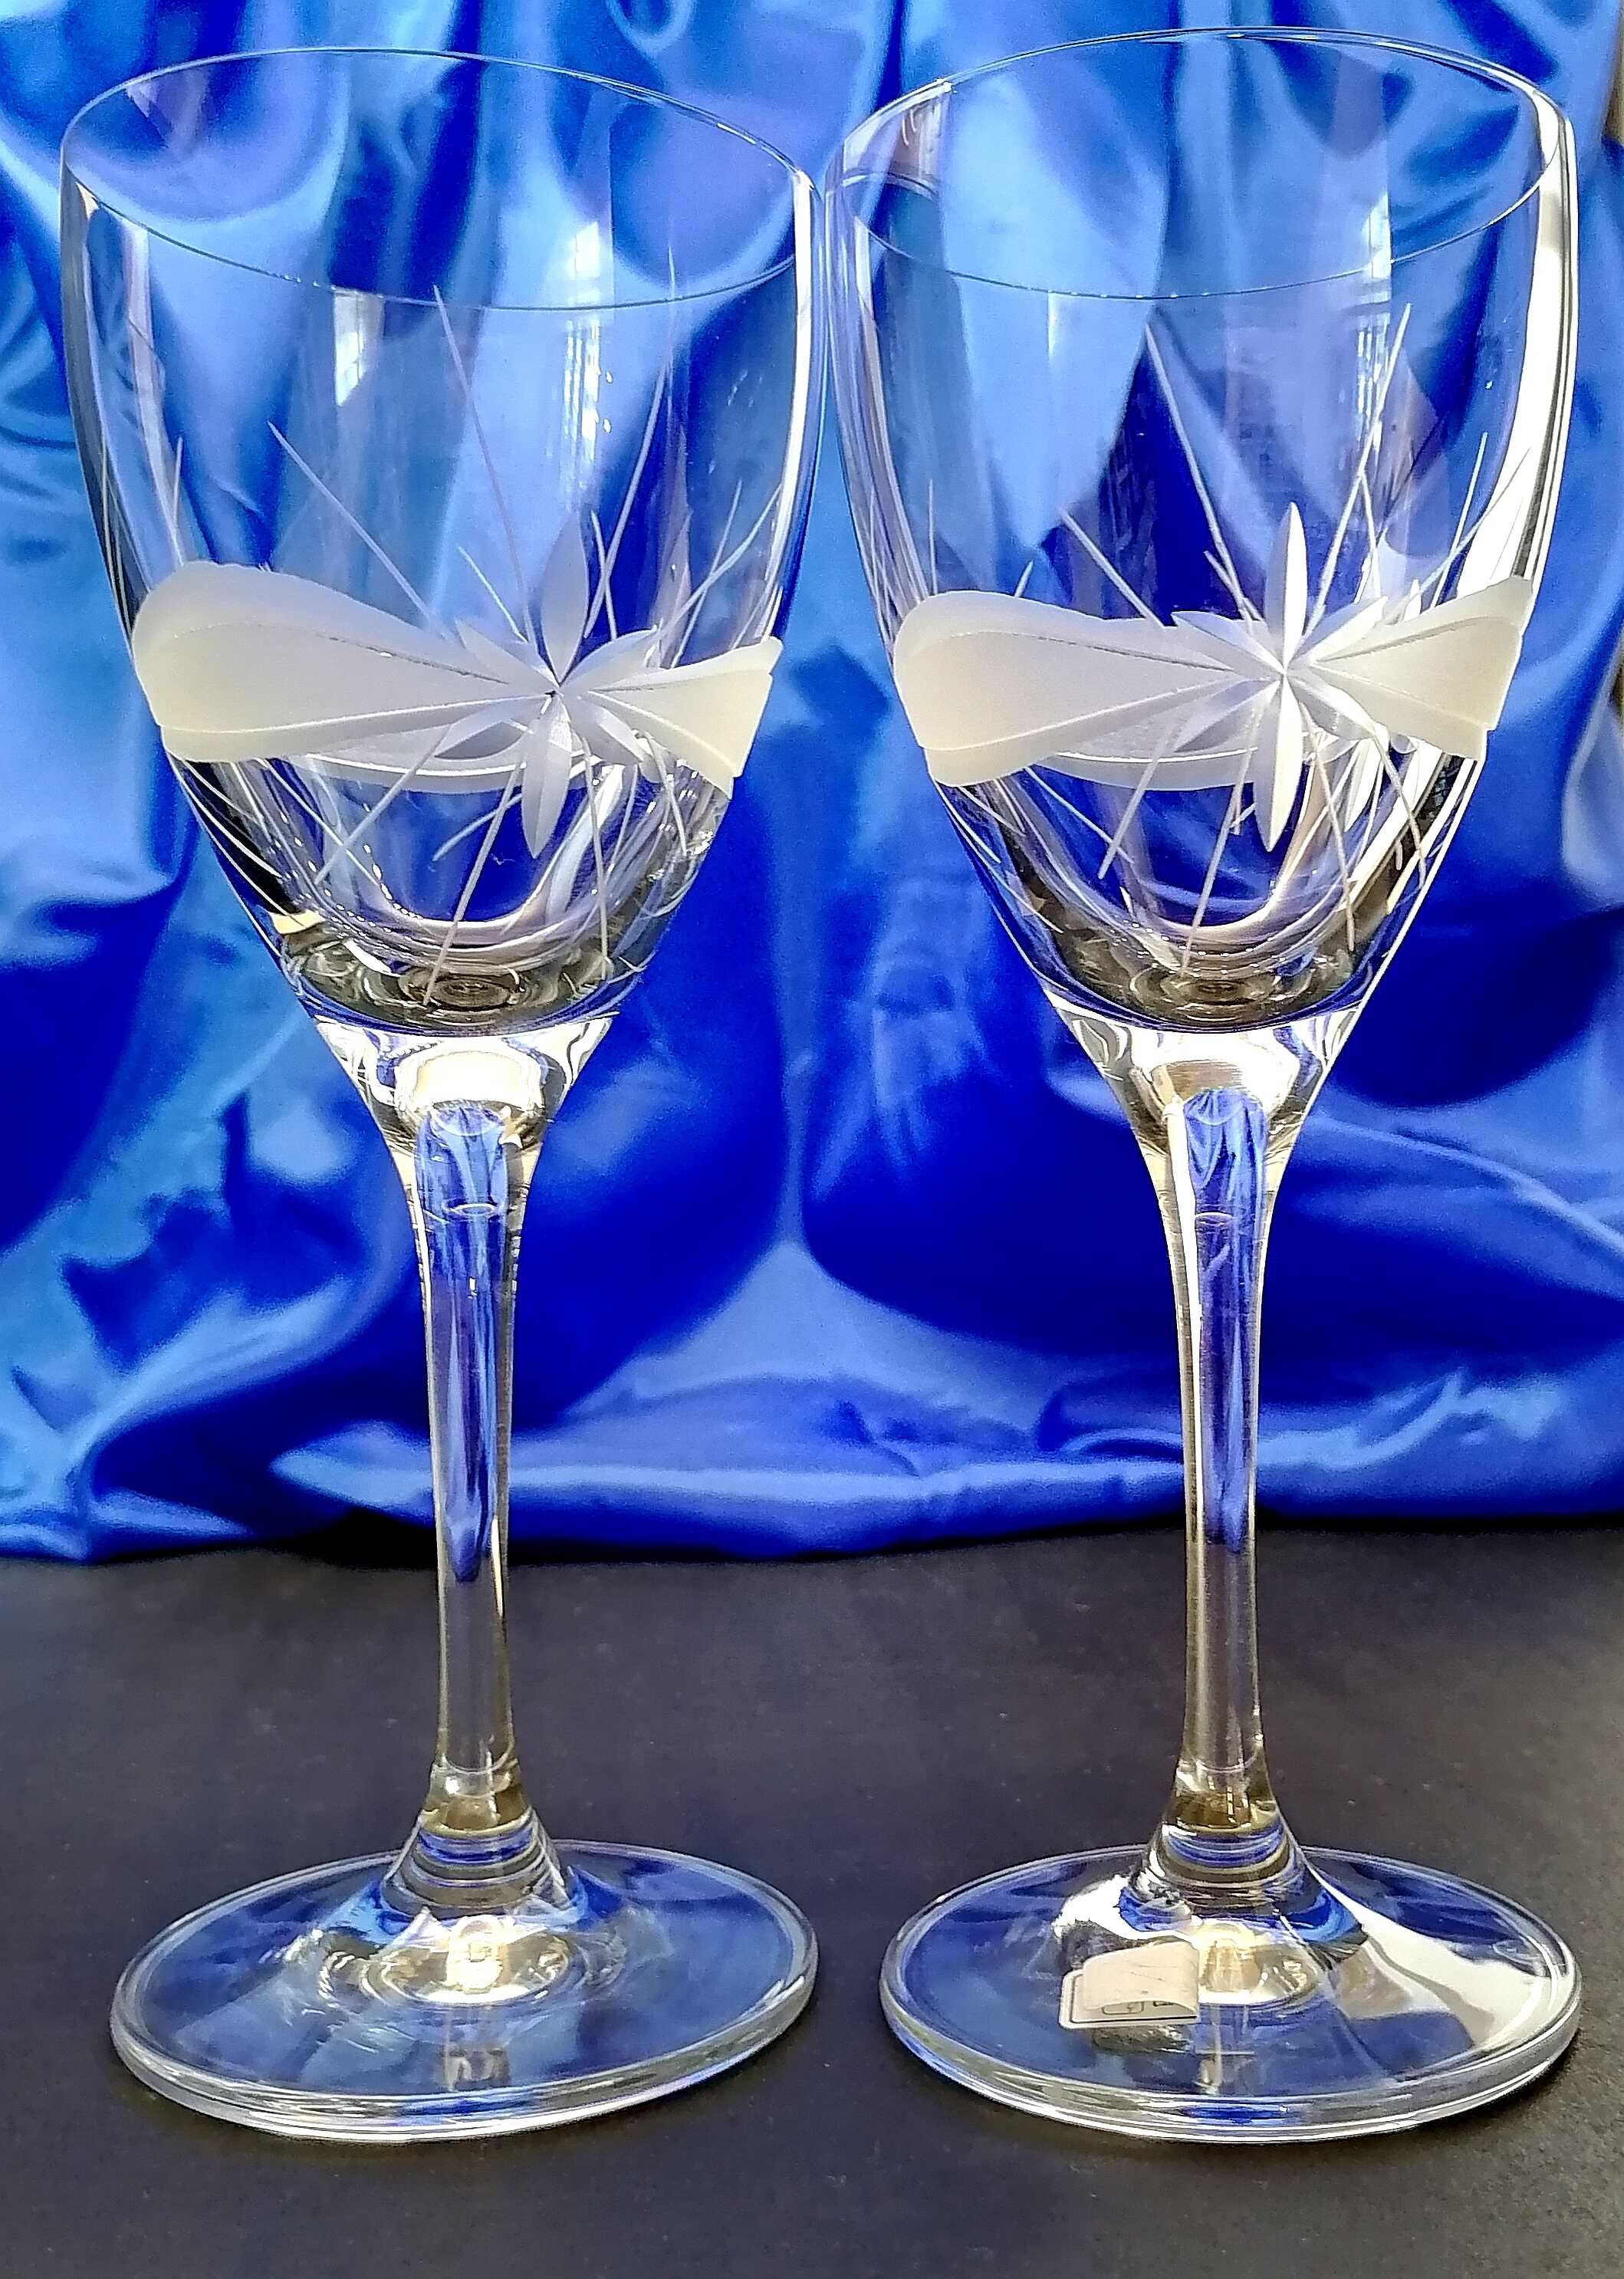 LsG-Crystal Skleničky broušené na bílé víno  dekor Kanta original balení Kate-003 250 ml 6 Ks.